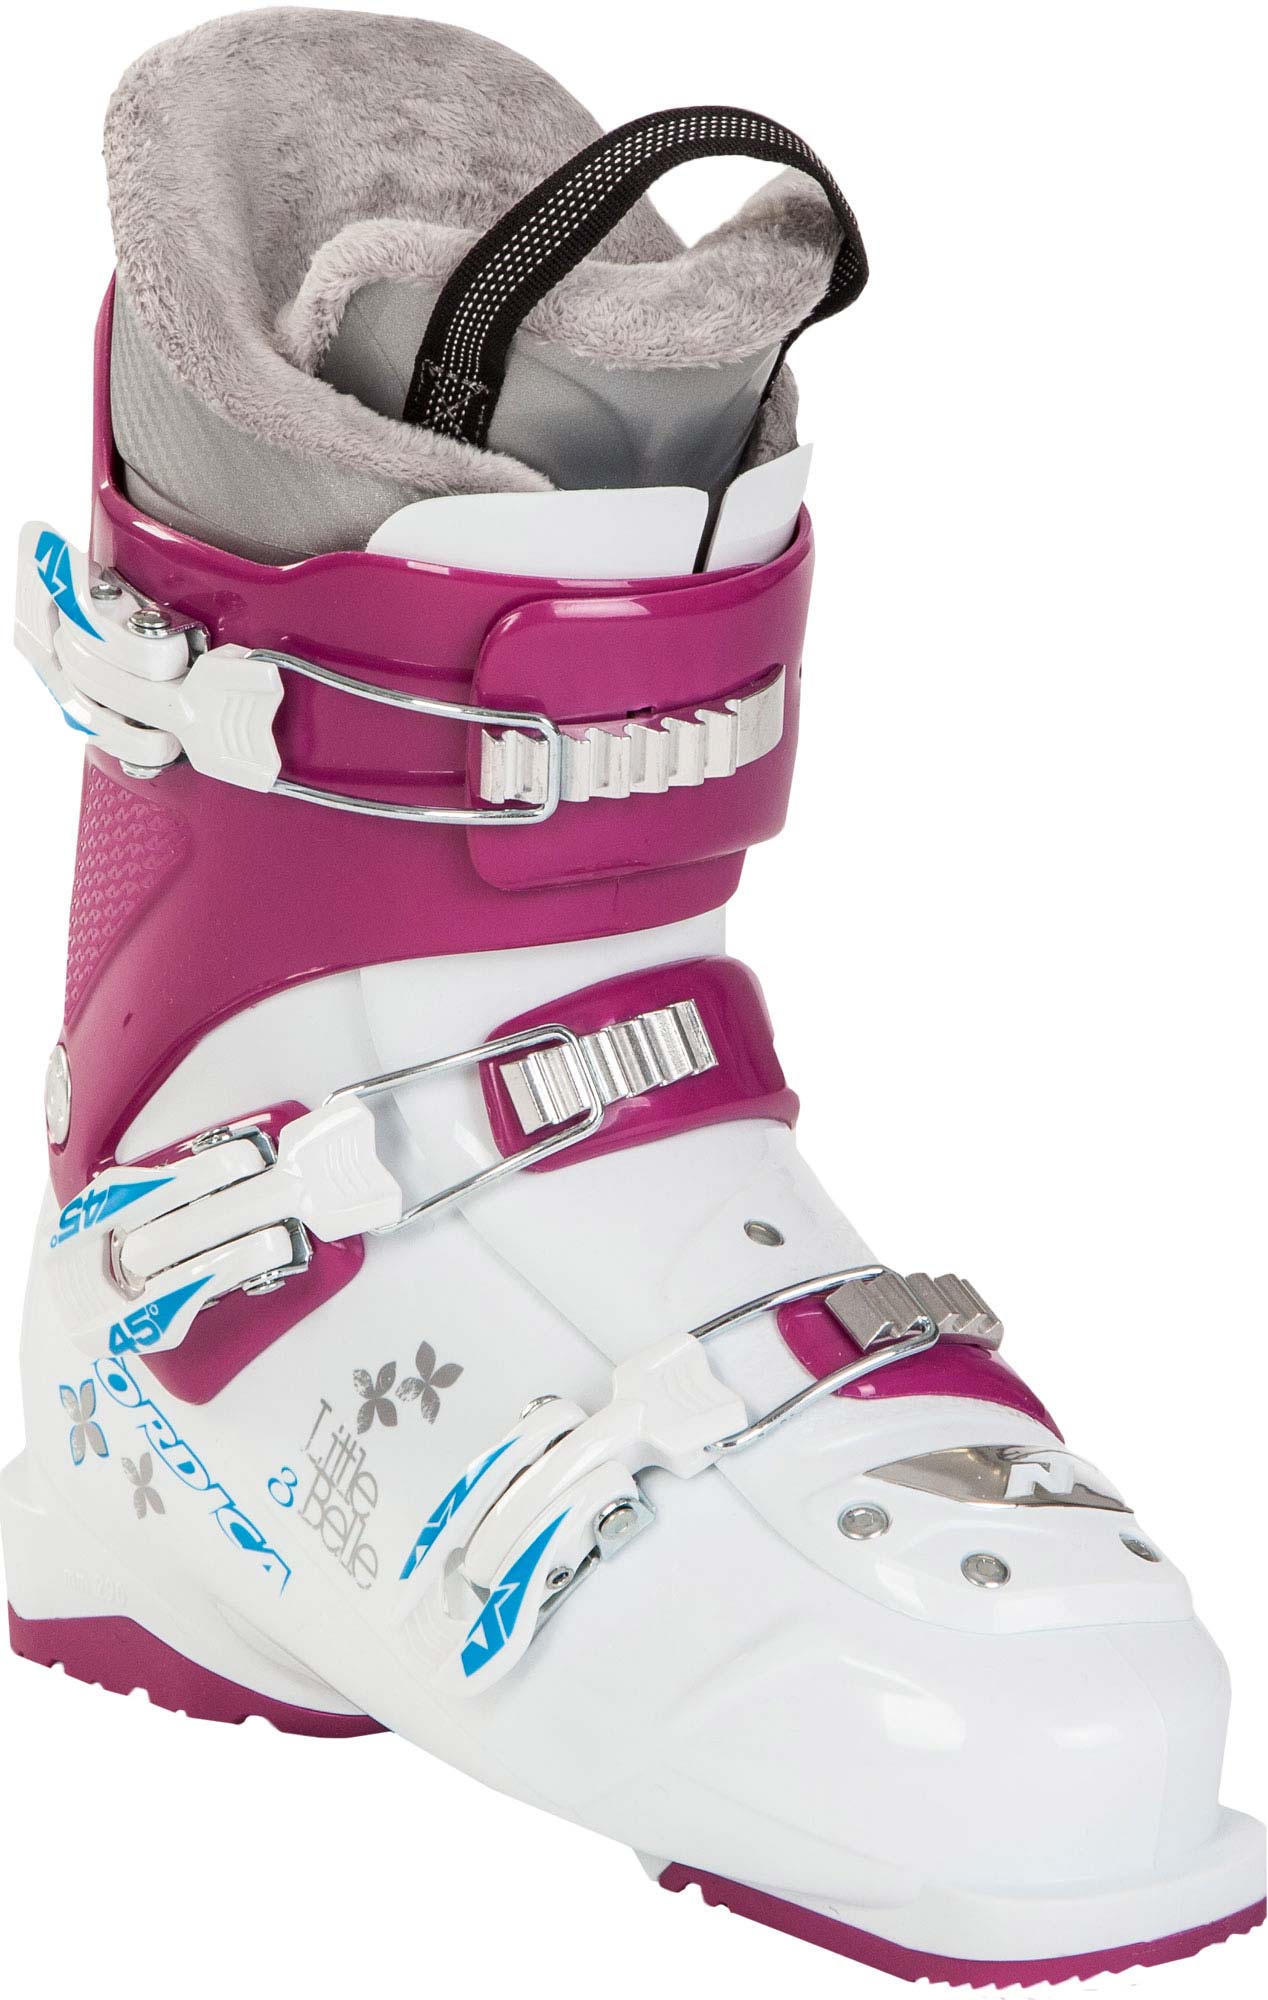 Kids' Ski Boots